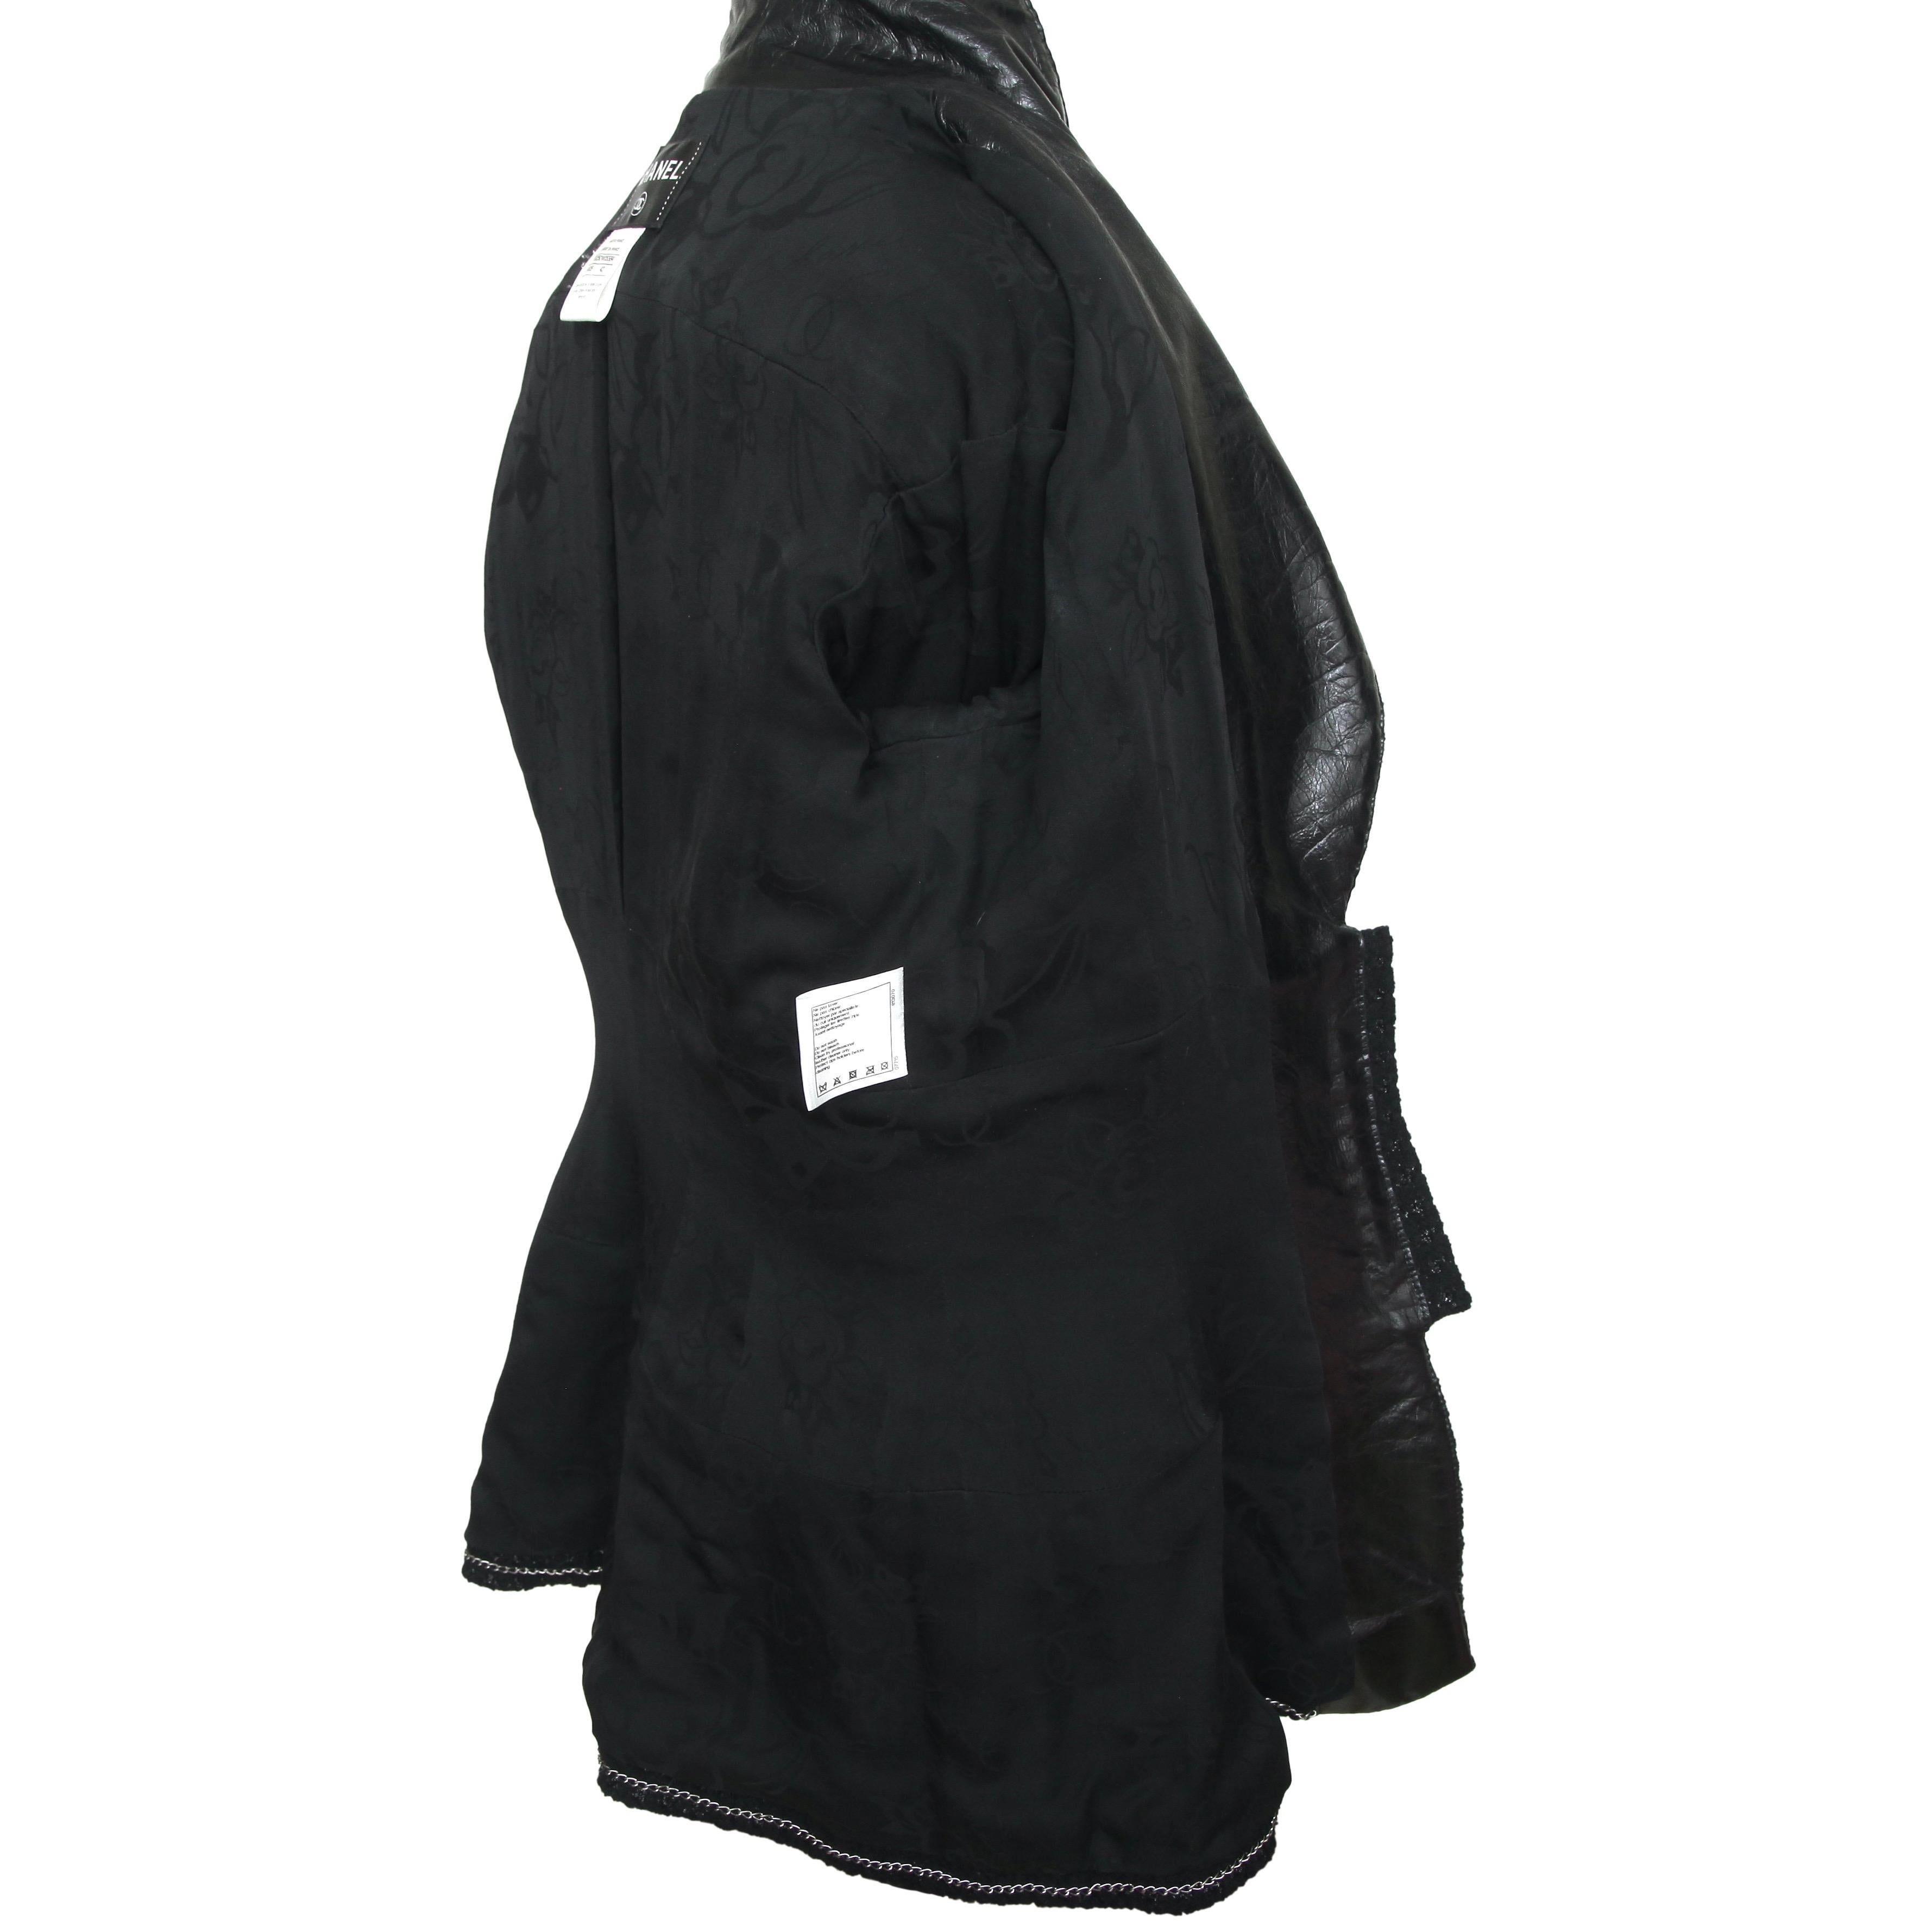 CHANEL Jacket Blazer Coat Tweed Black MetaIlic Leather Silver Chain Sz 42 2014 C For Sale 5